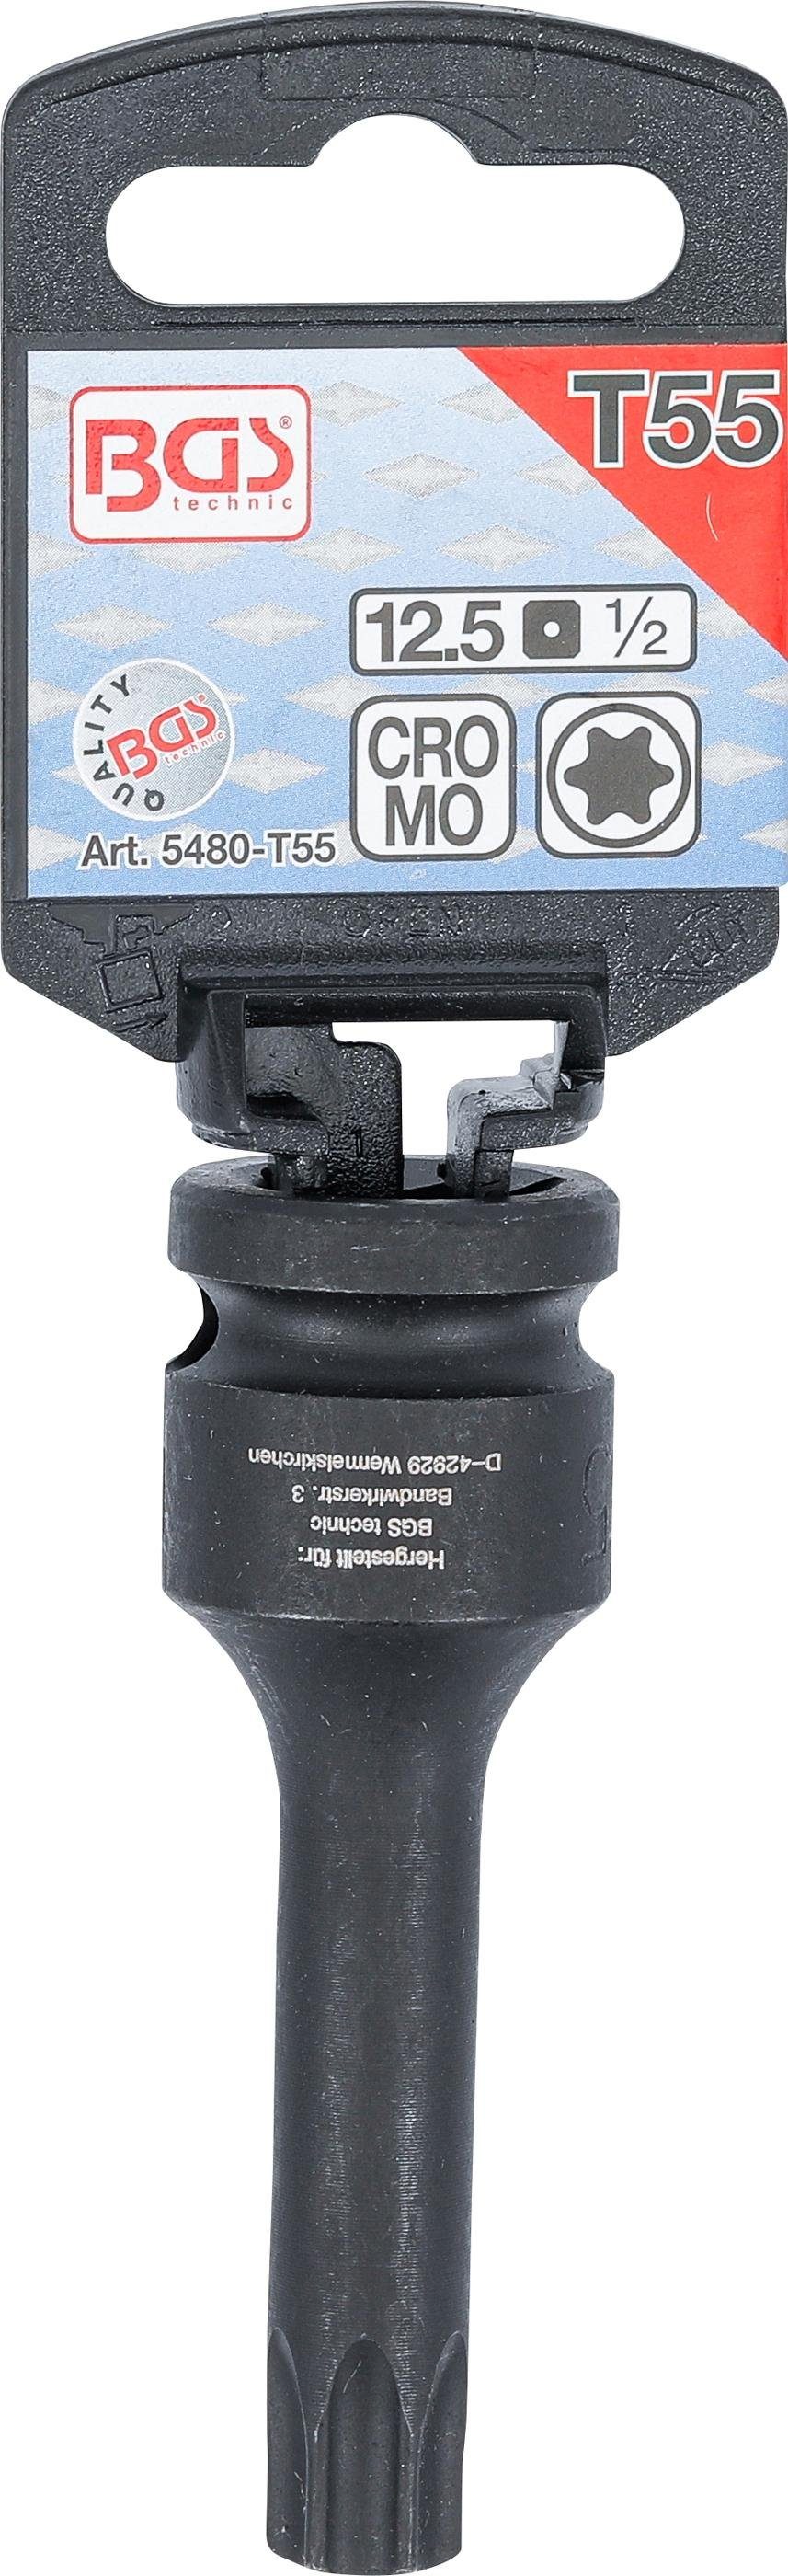 12,5 Torx) Bit-Schraubendreher (1/2), mm Antrieb T55 Innenvierkant T-Profil technic (für BGS Kraft-Bit-Einsatz,